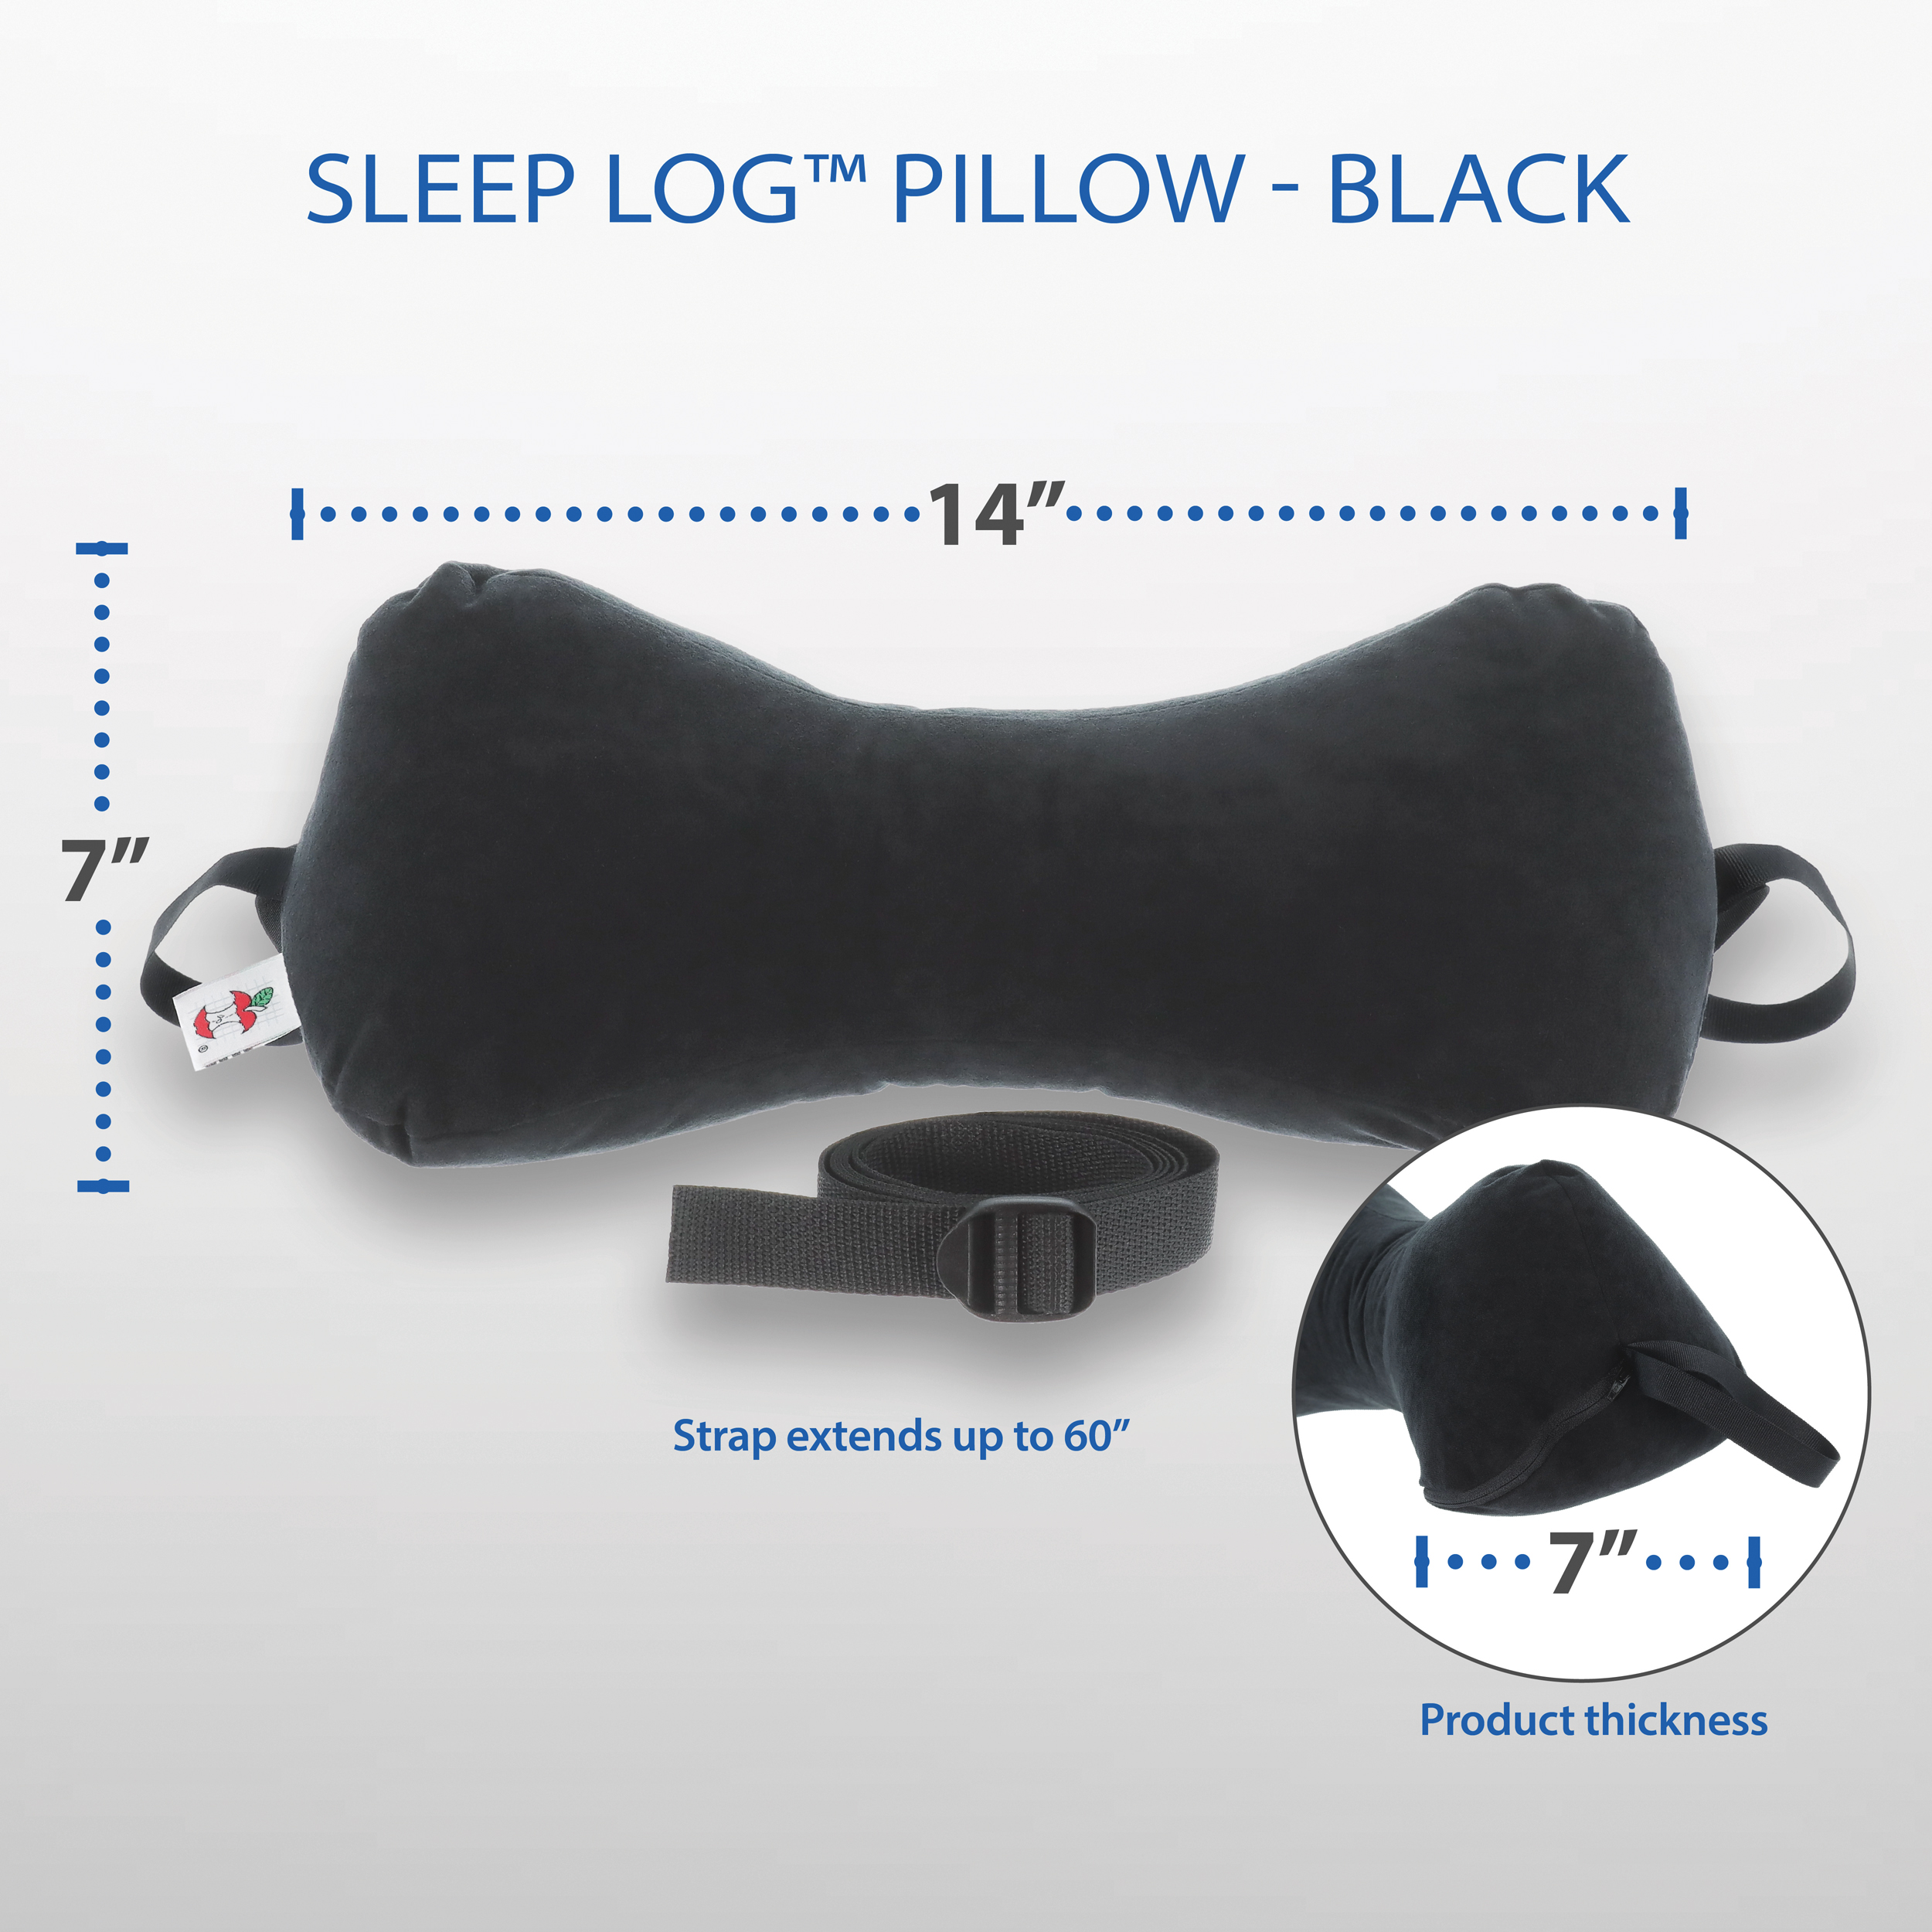 Lumbar Support Back Pillow for Sleeping, Neck Pillows for Sleeping